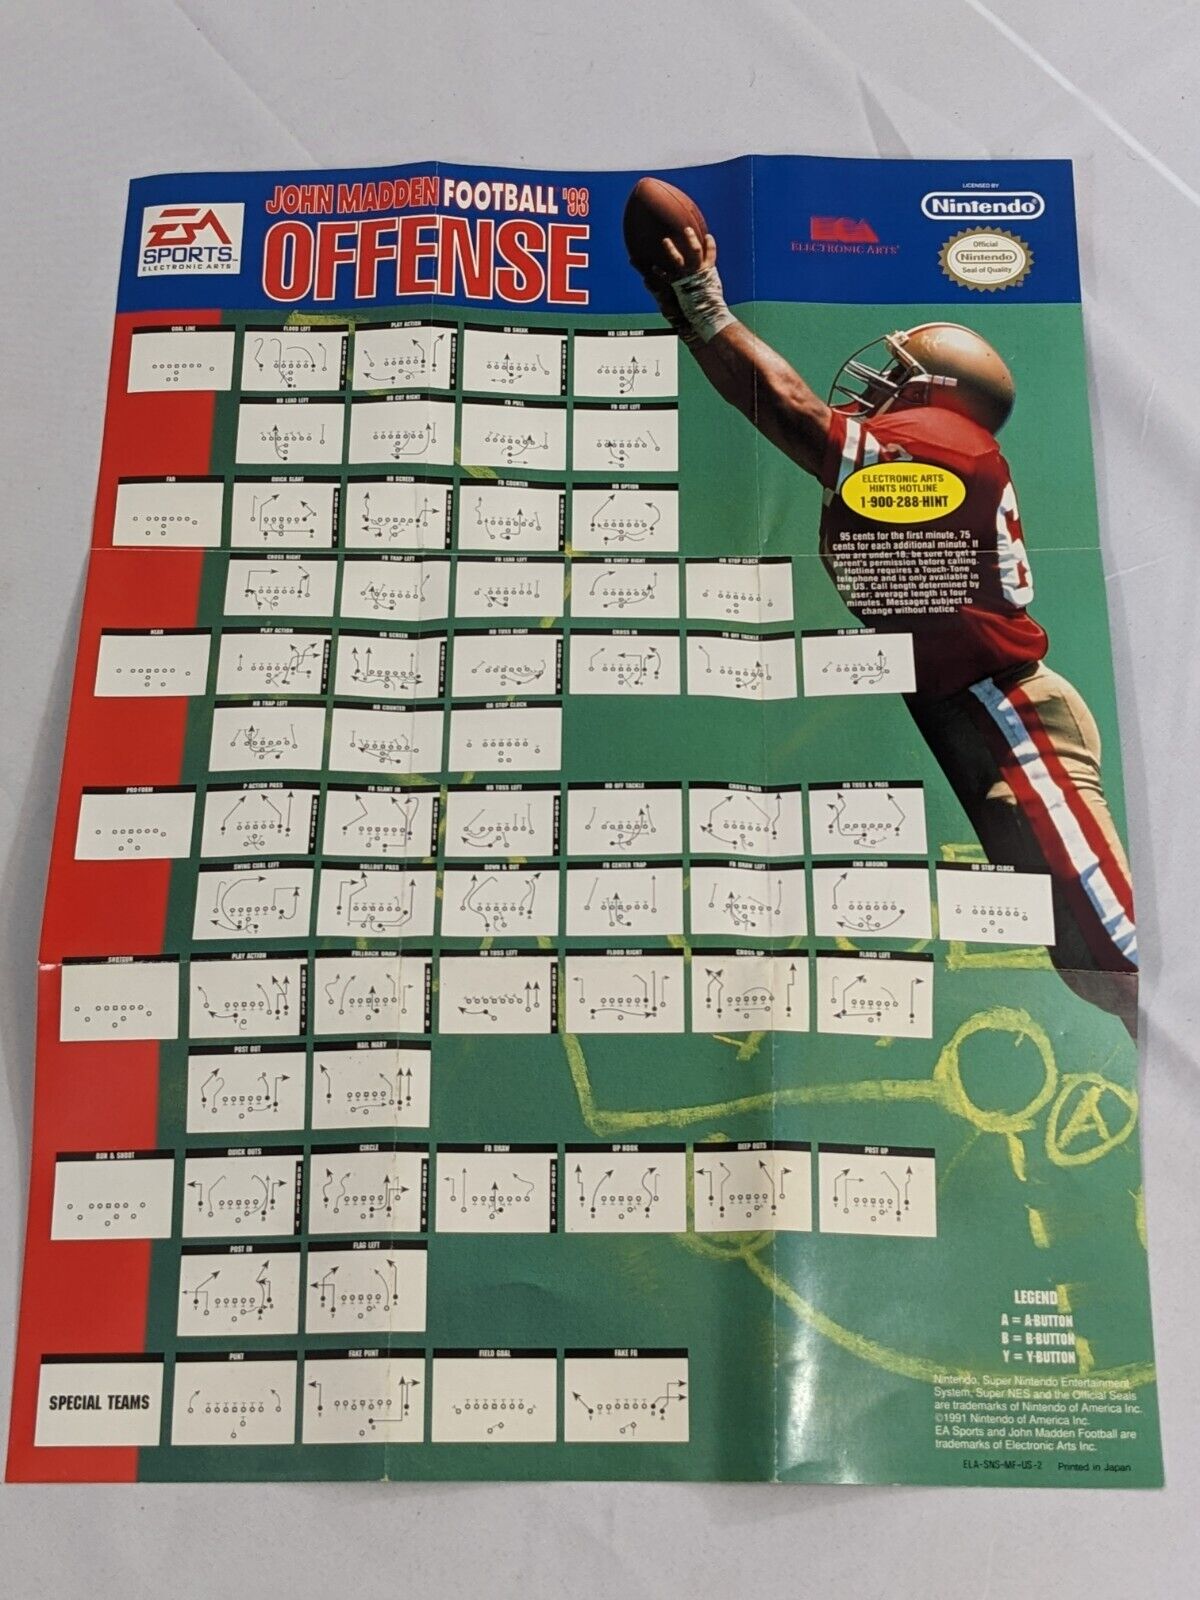 Nintendo John Madden Football '93 Offense & Defense Poster Guide by EA Sports